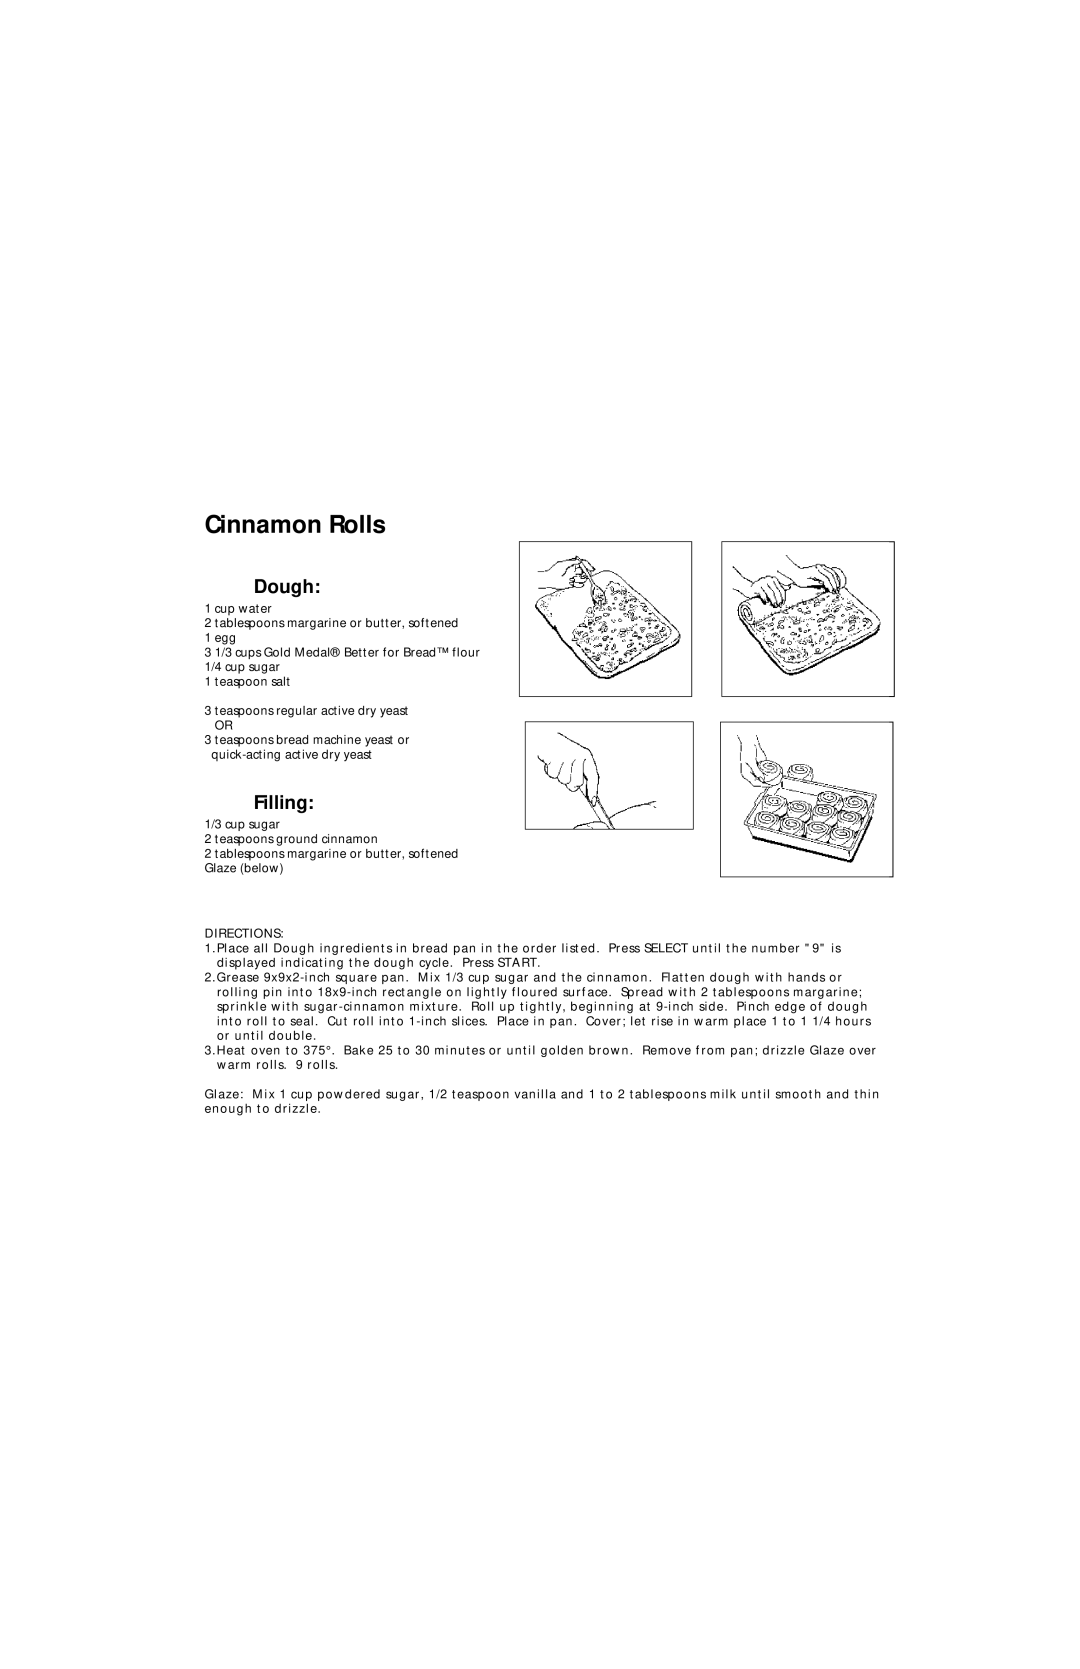 Oster Bread & Dough Maker manual Cinnamon Rolls, Filling 